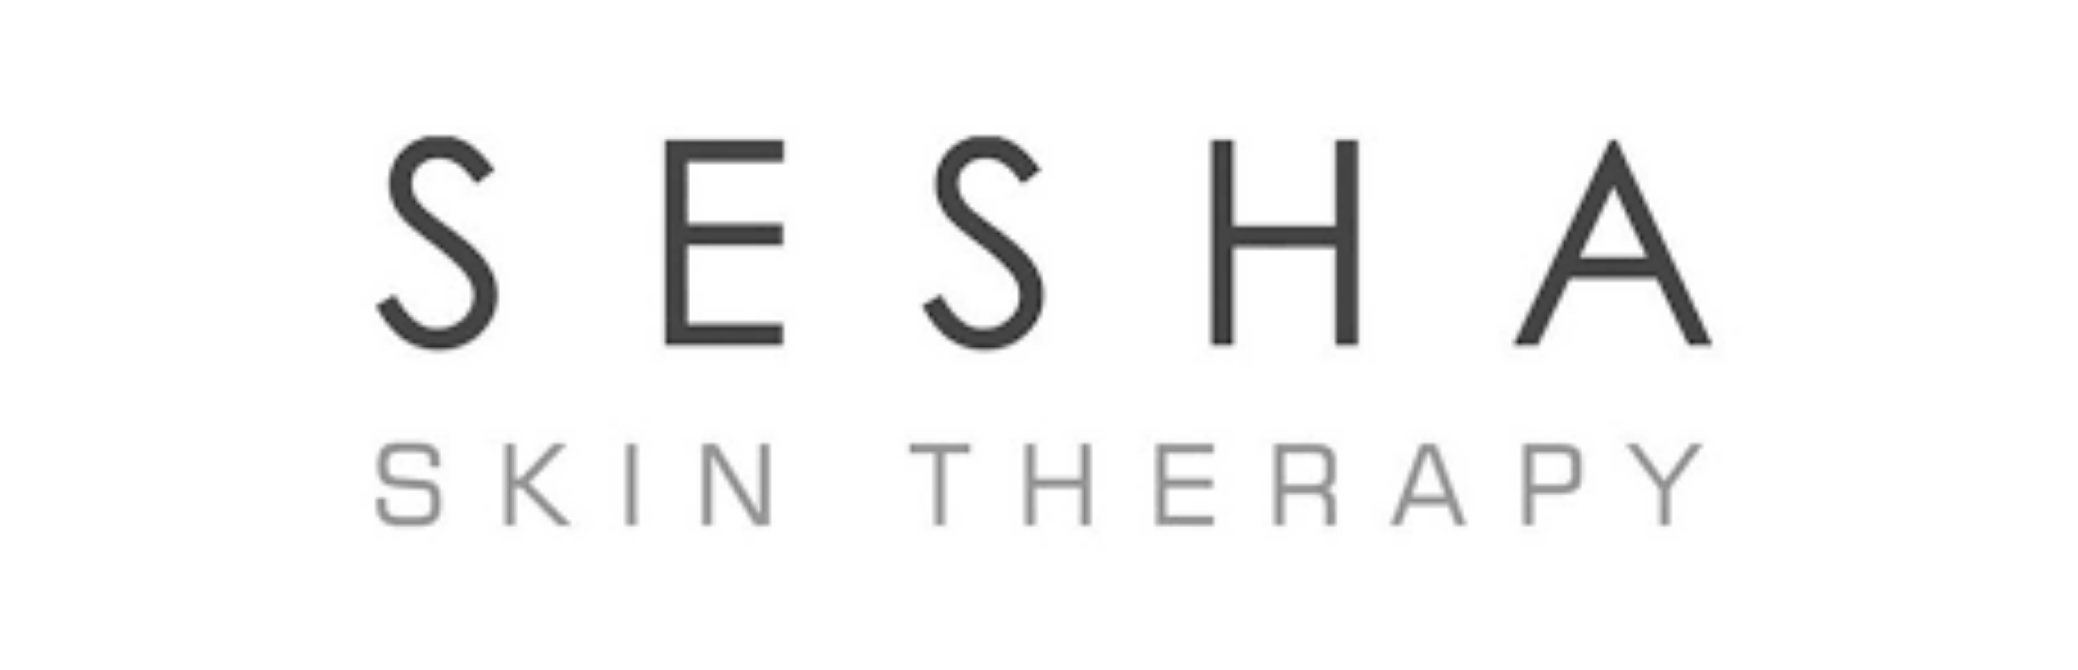 sesha skincare logo